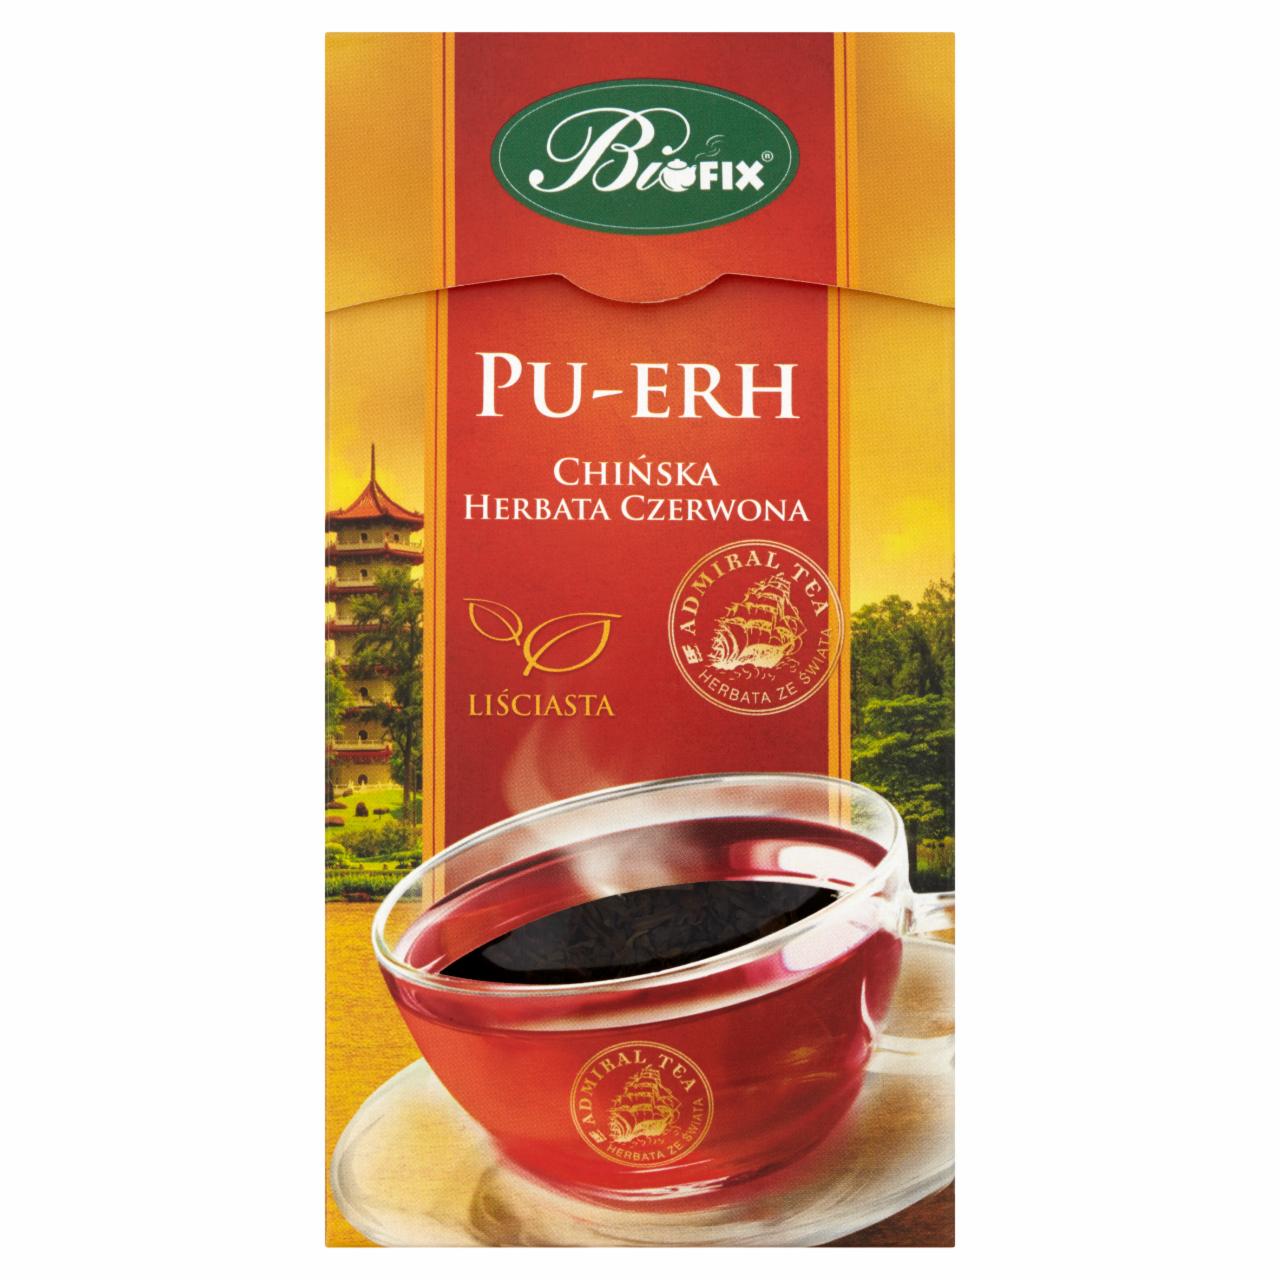 Zdjęcia - Bifix Admiral Tea Pu-Erh Chińska herbata czerwona liściasta 100 g